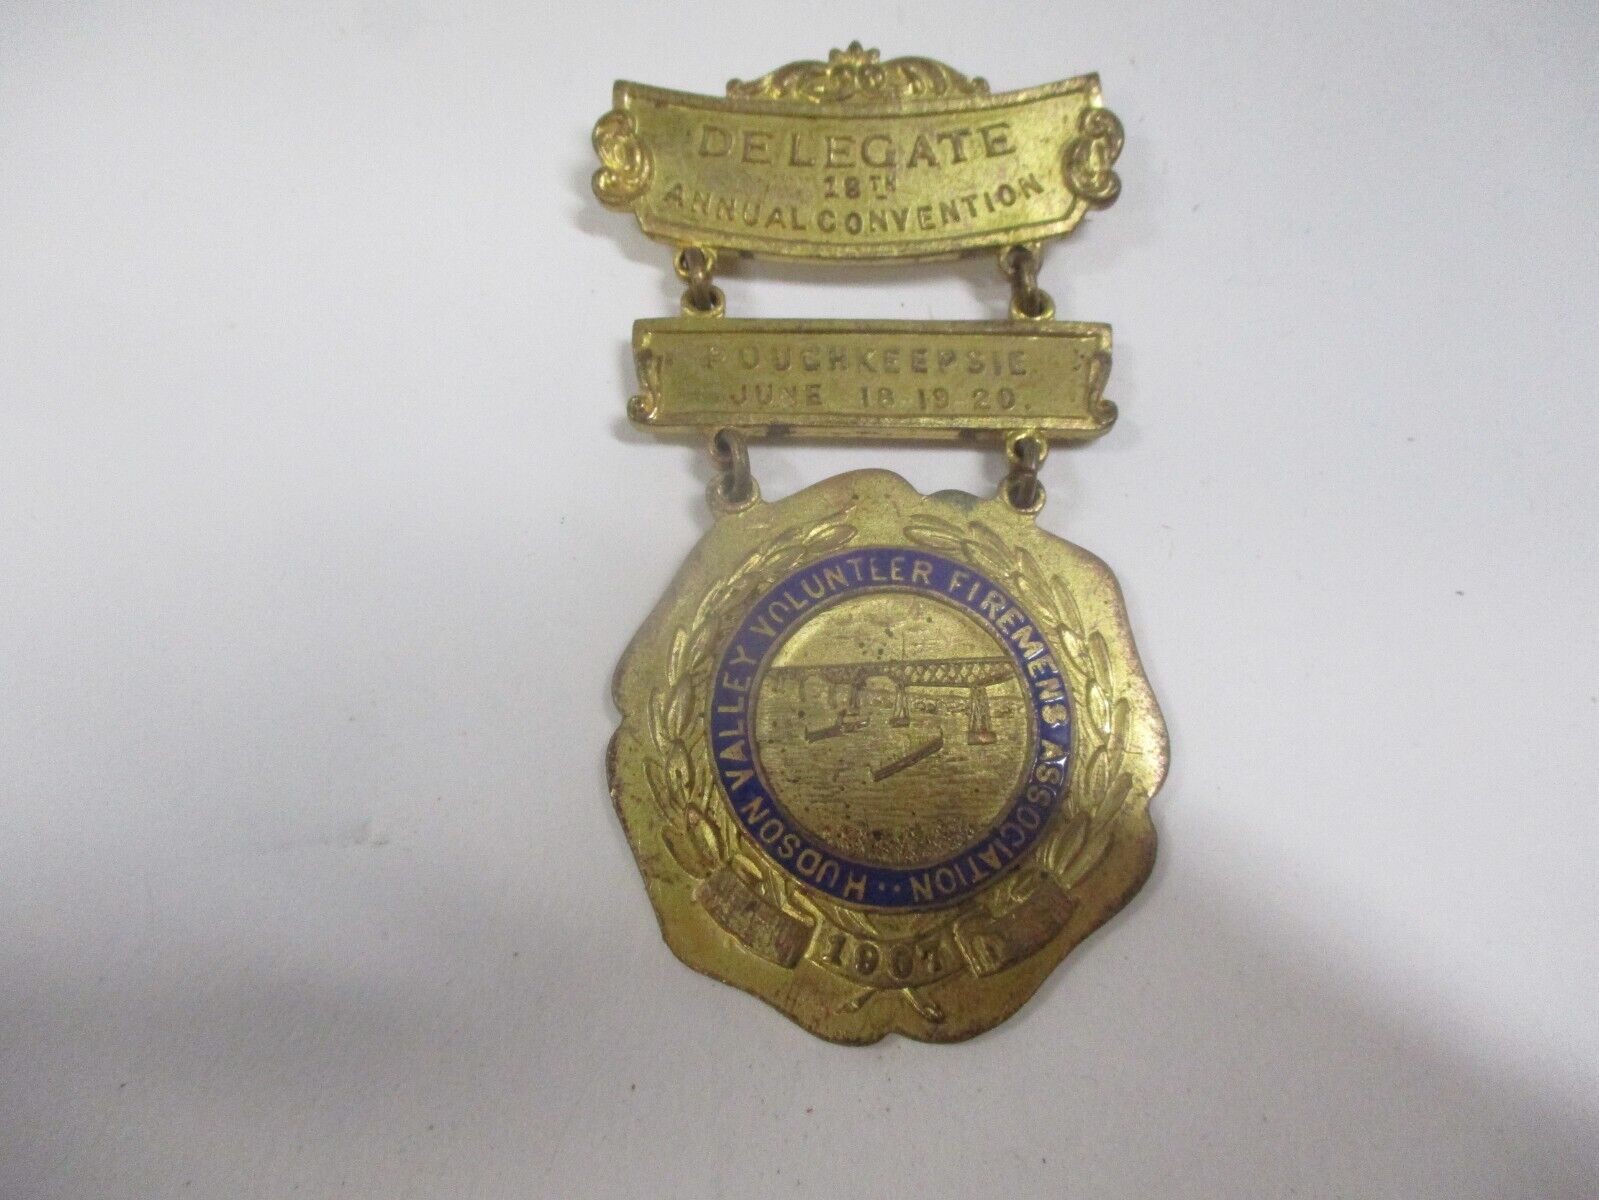 1907 Poughkeepsie NY Volunteer Firemen's Association Badge Medal